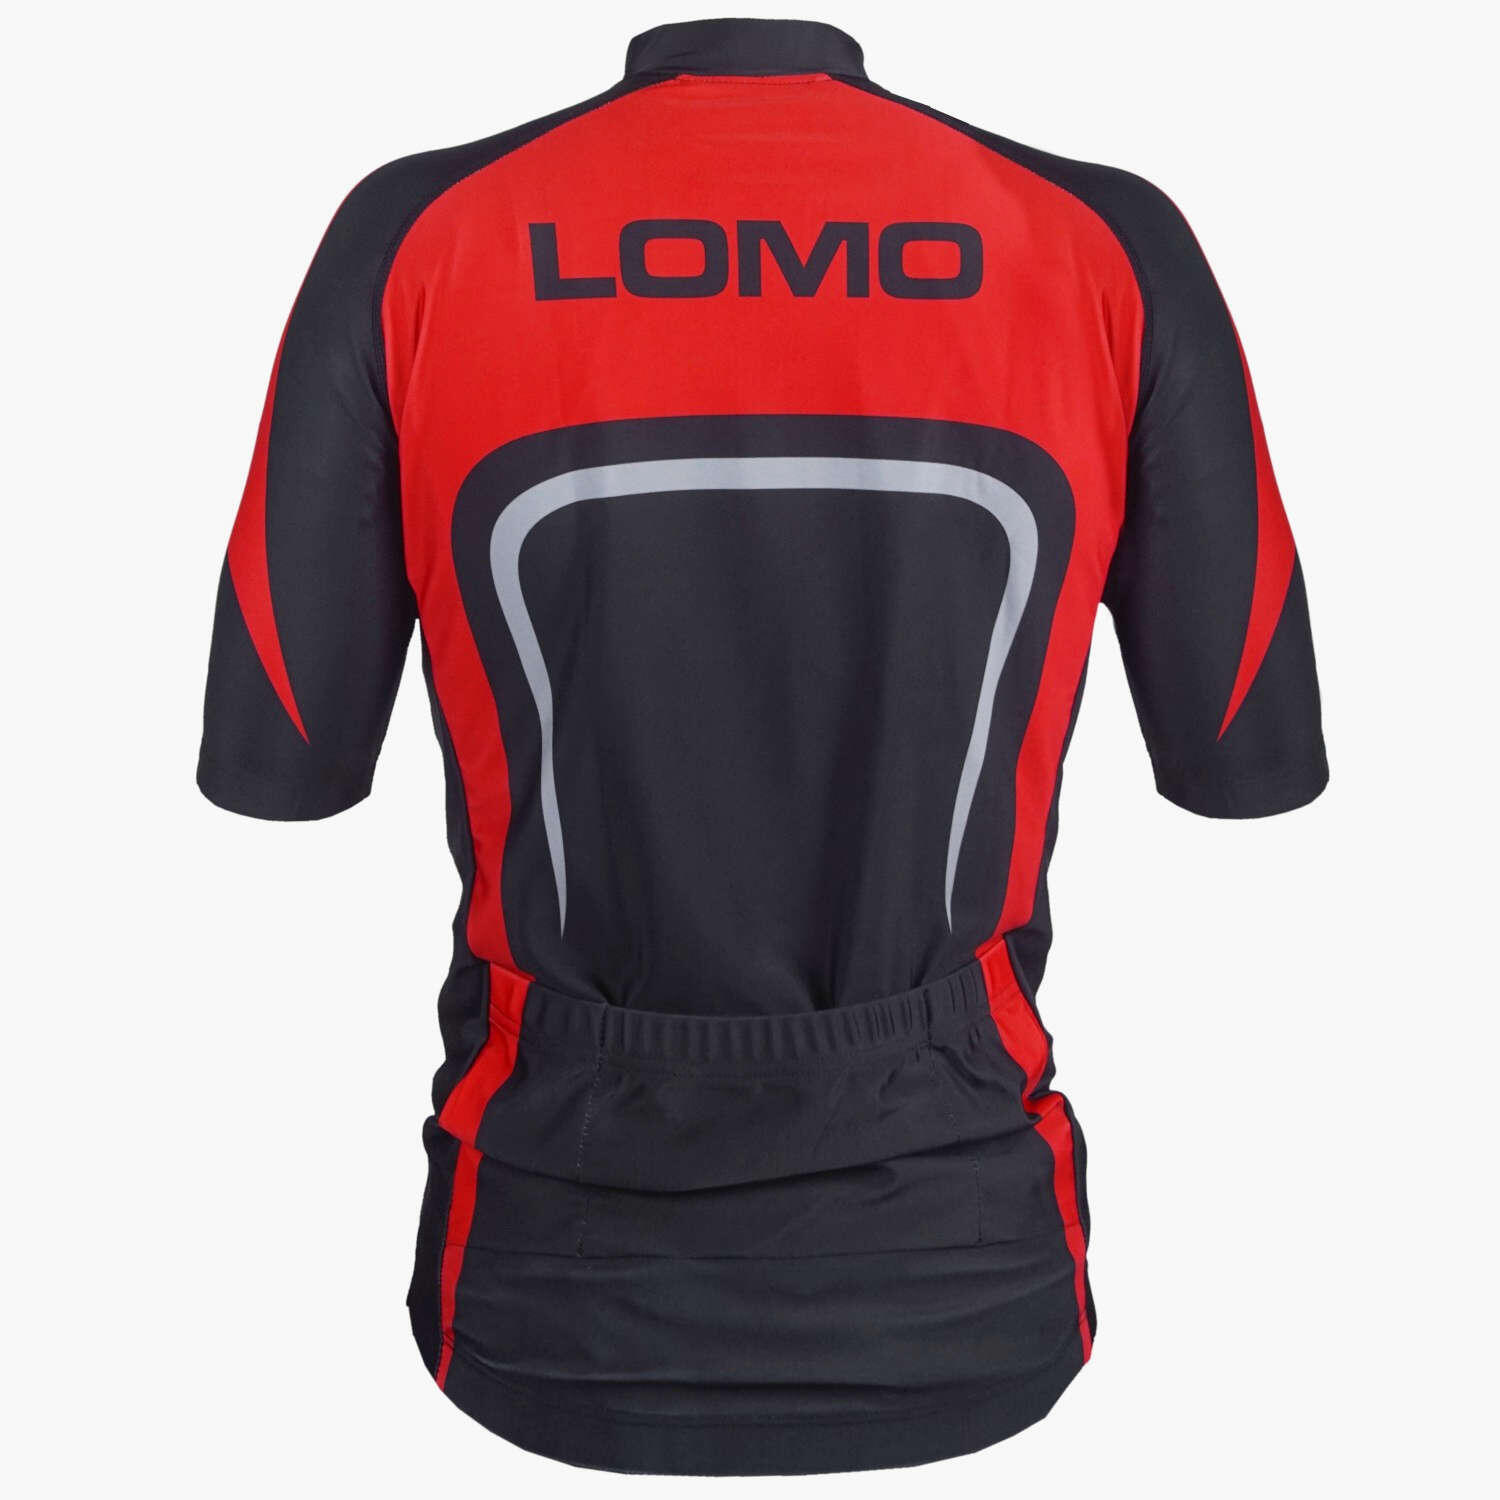 Lomo Lomo Short Sleeve Cycling Top - Full Zip 7/7